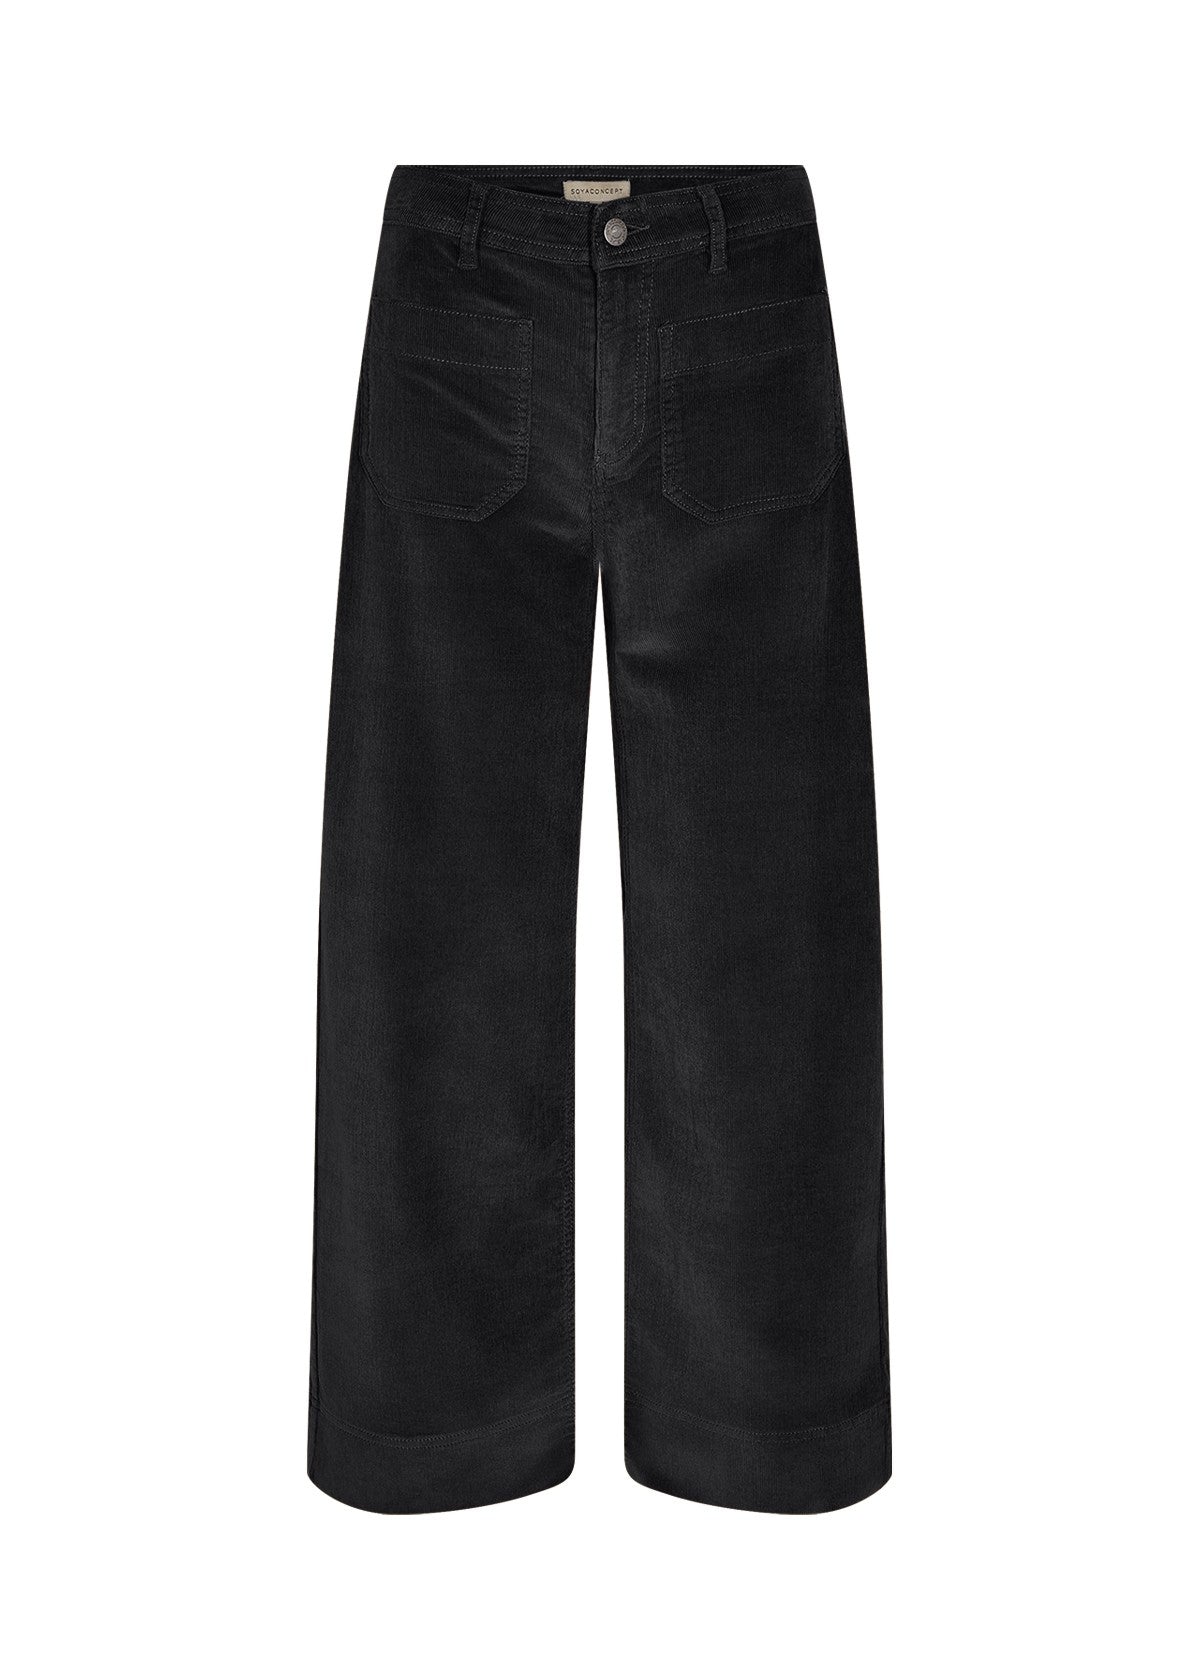 Soya Concept Corduroy Trousers Black